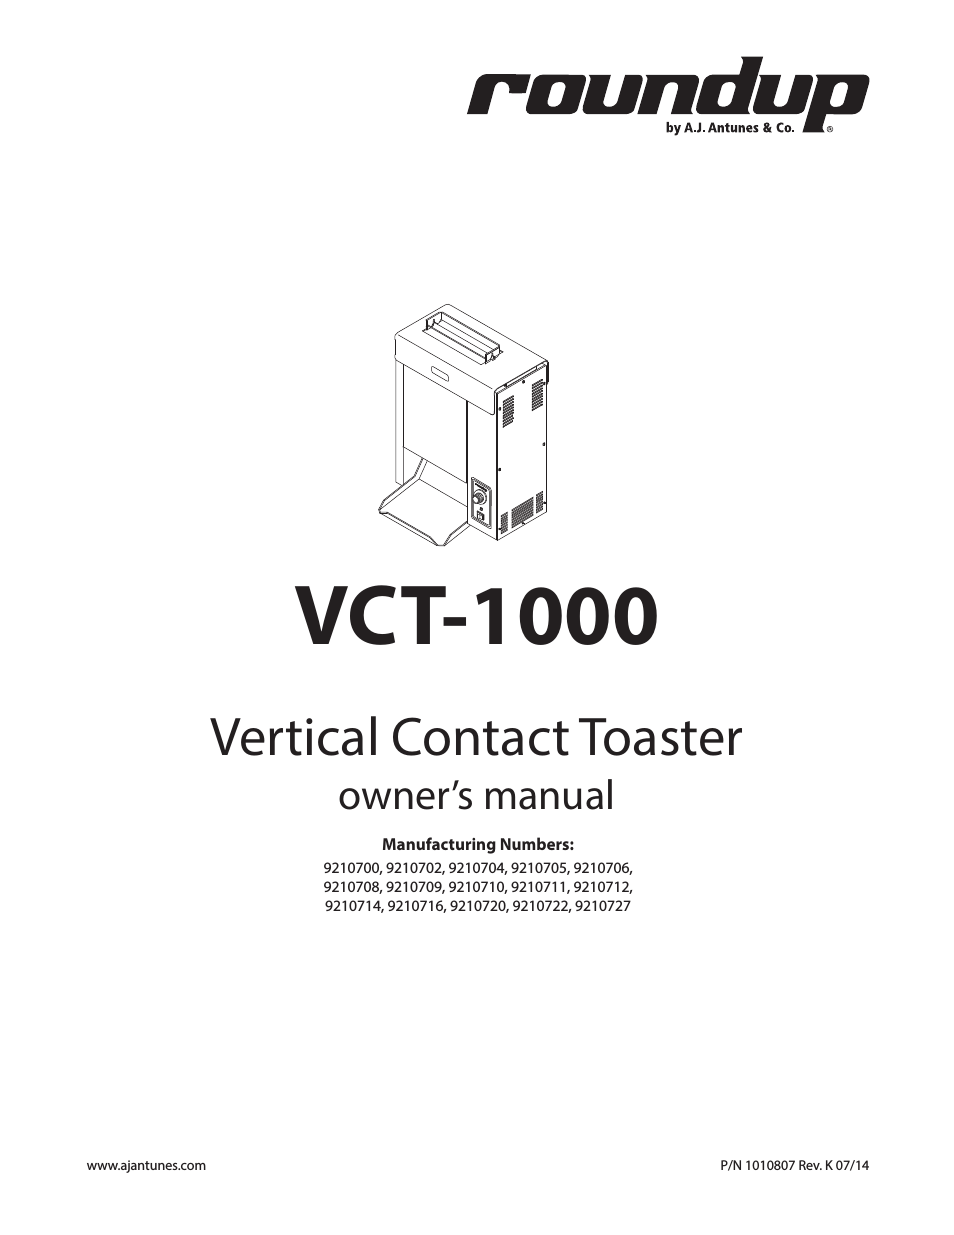 VCT-1000 9210700